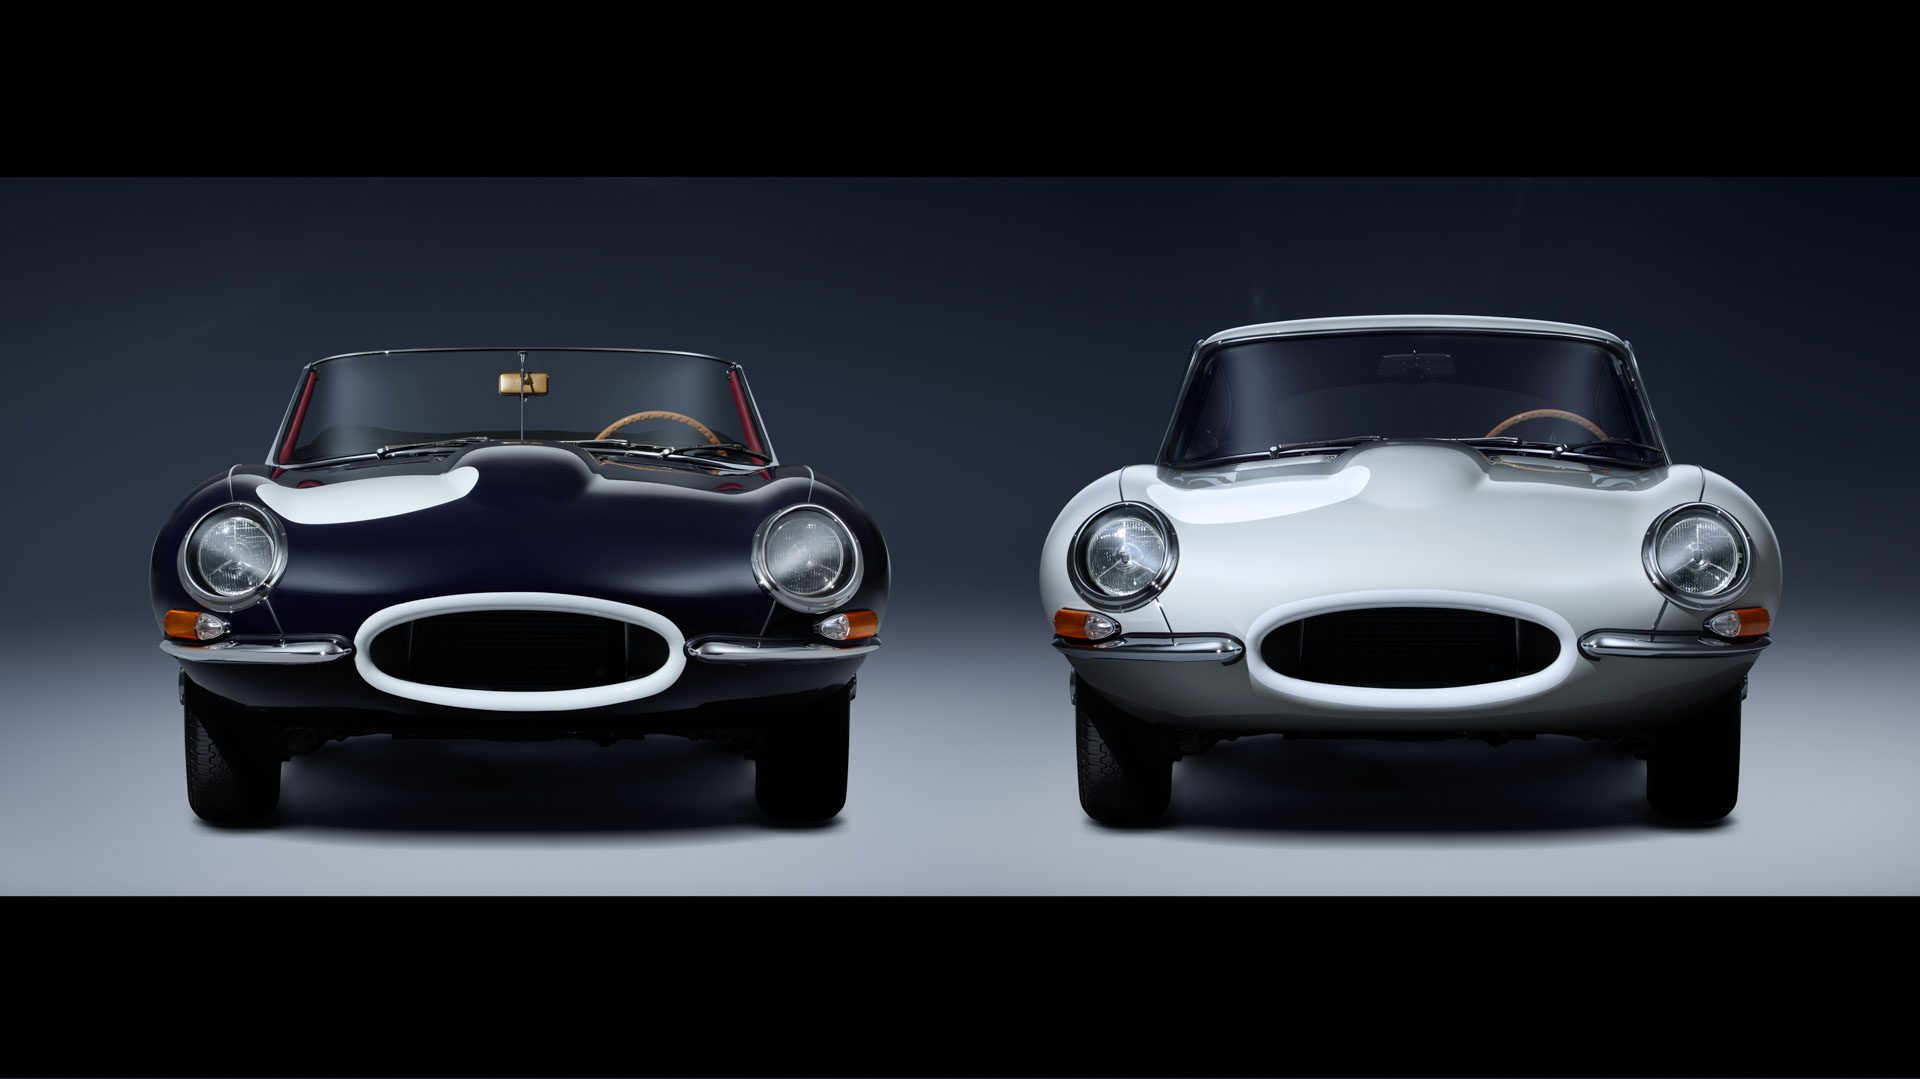 Jaguar E-Type Project ZP | Fanaticar Magazin